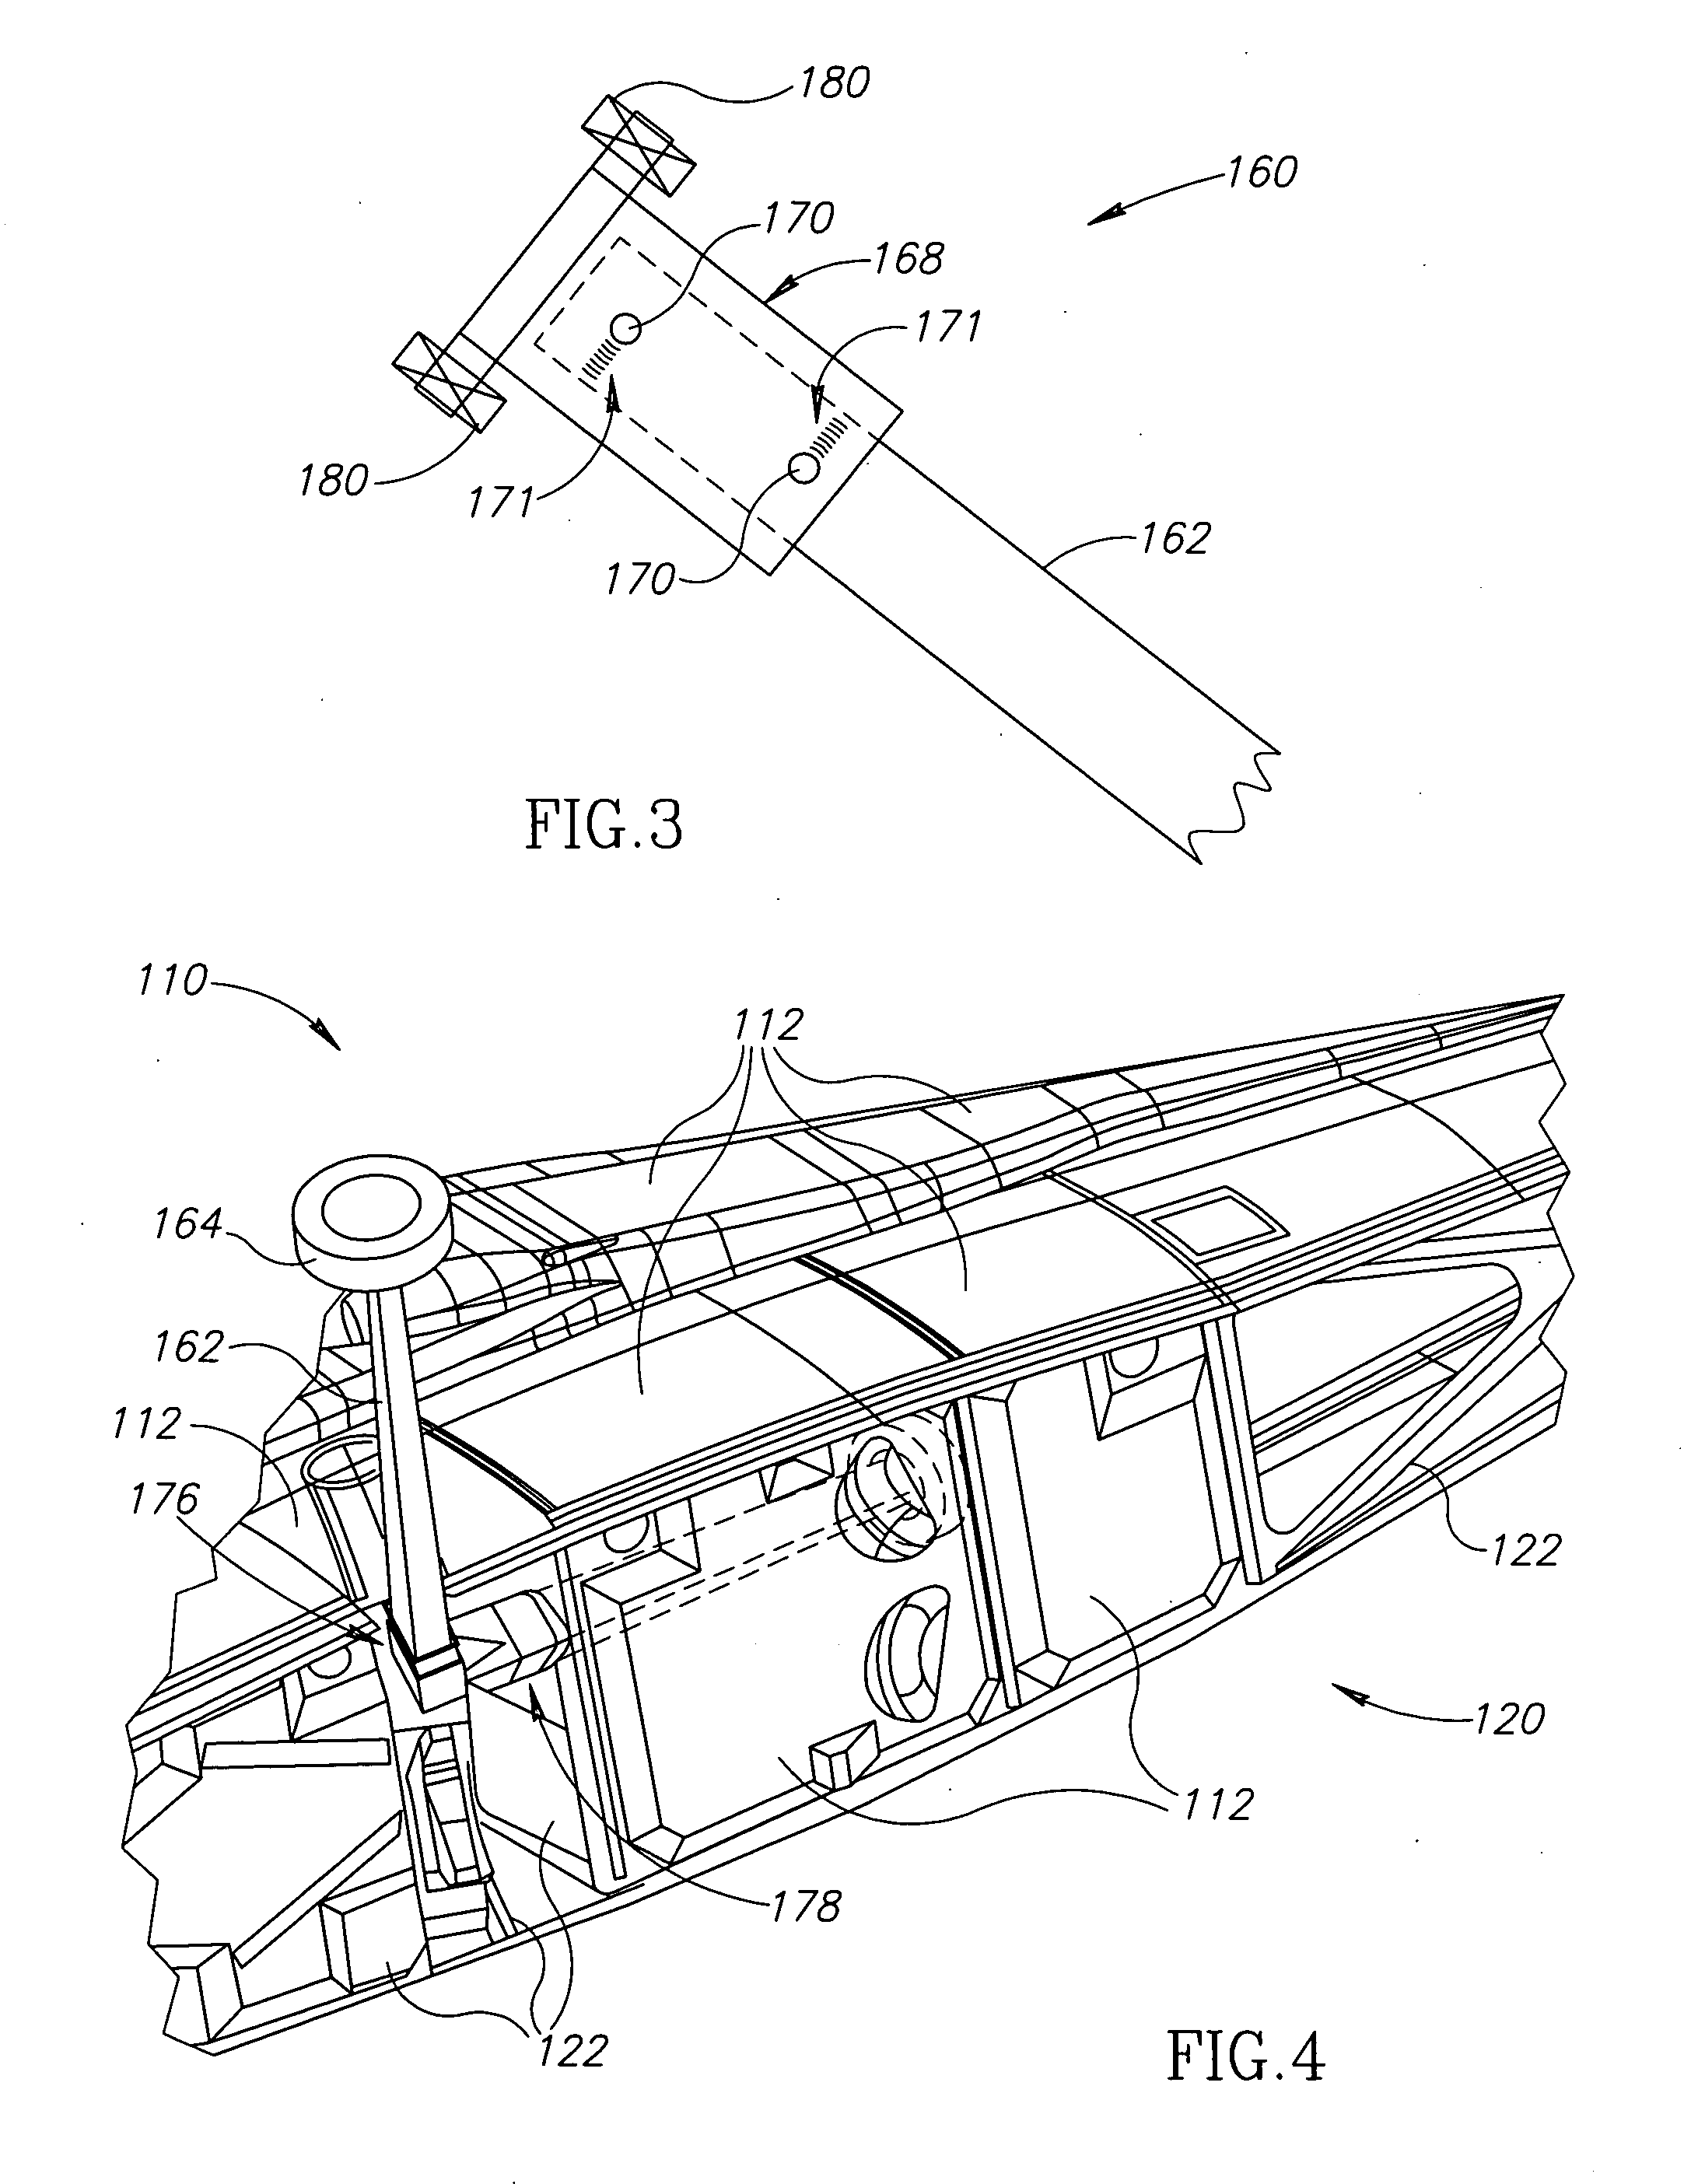 Composite landing gear apparatus and methods